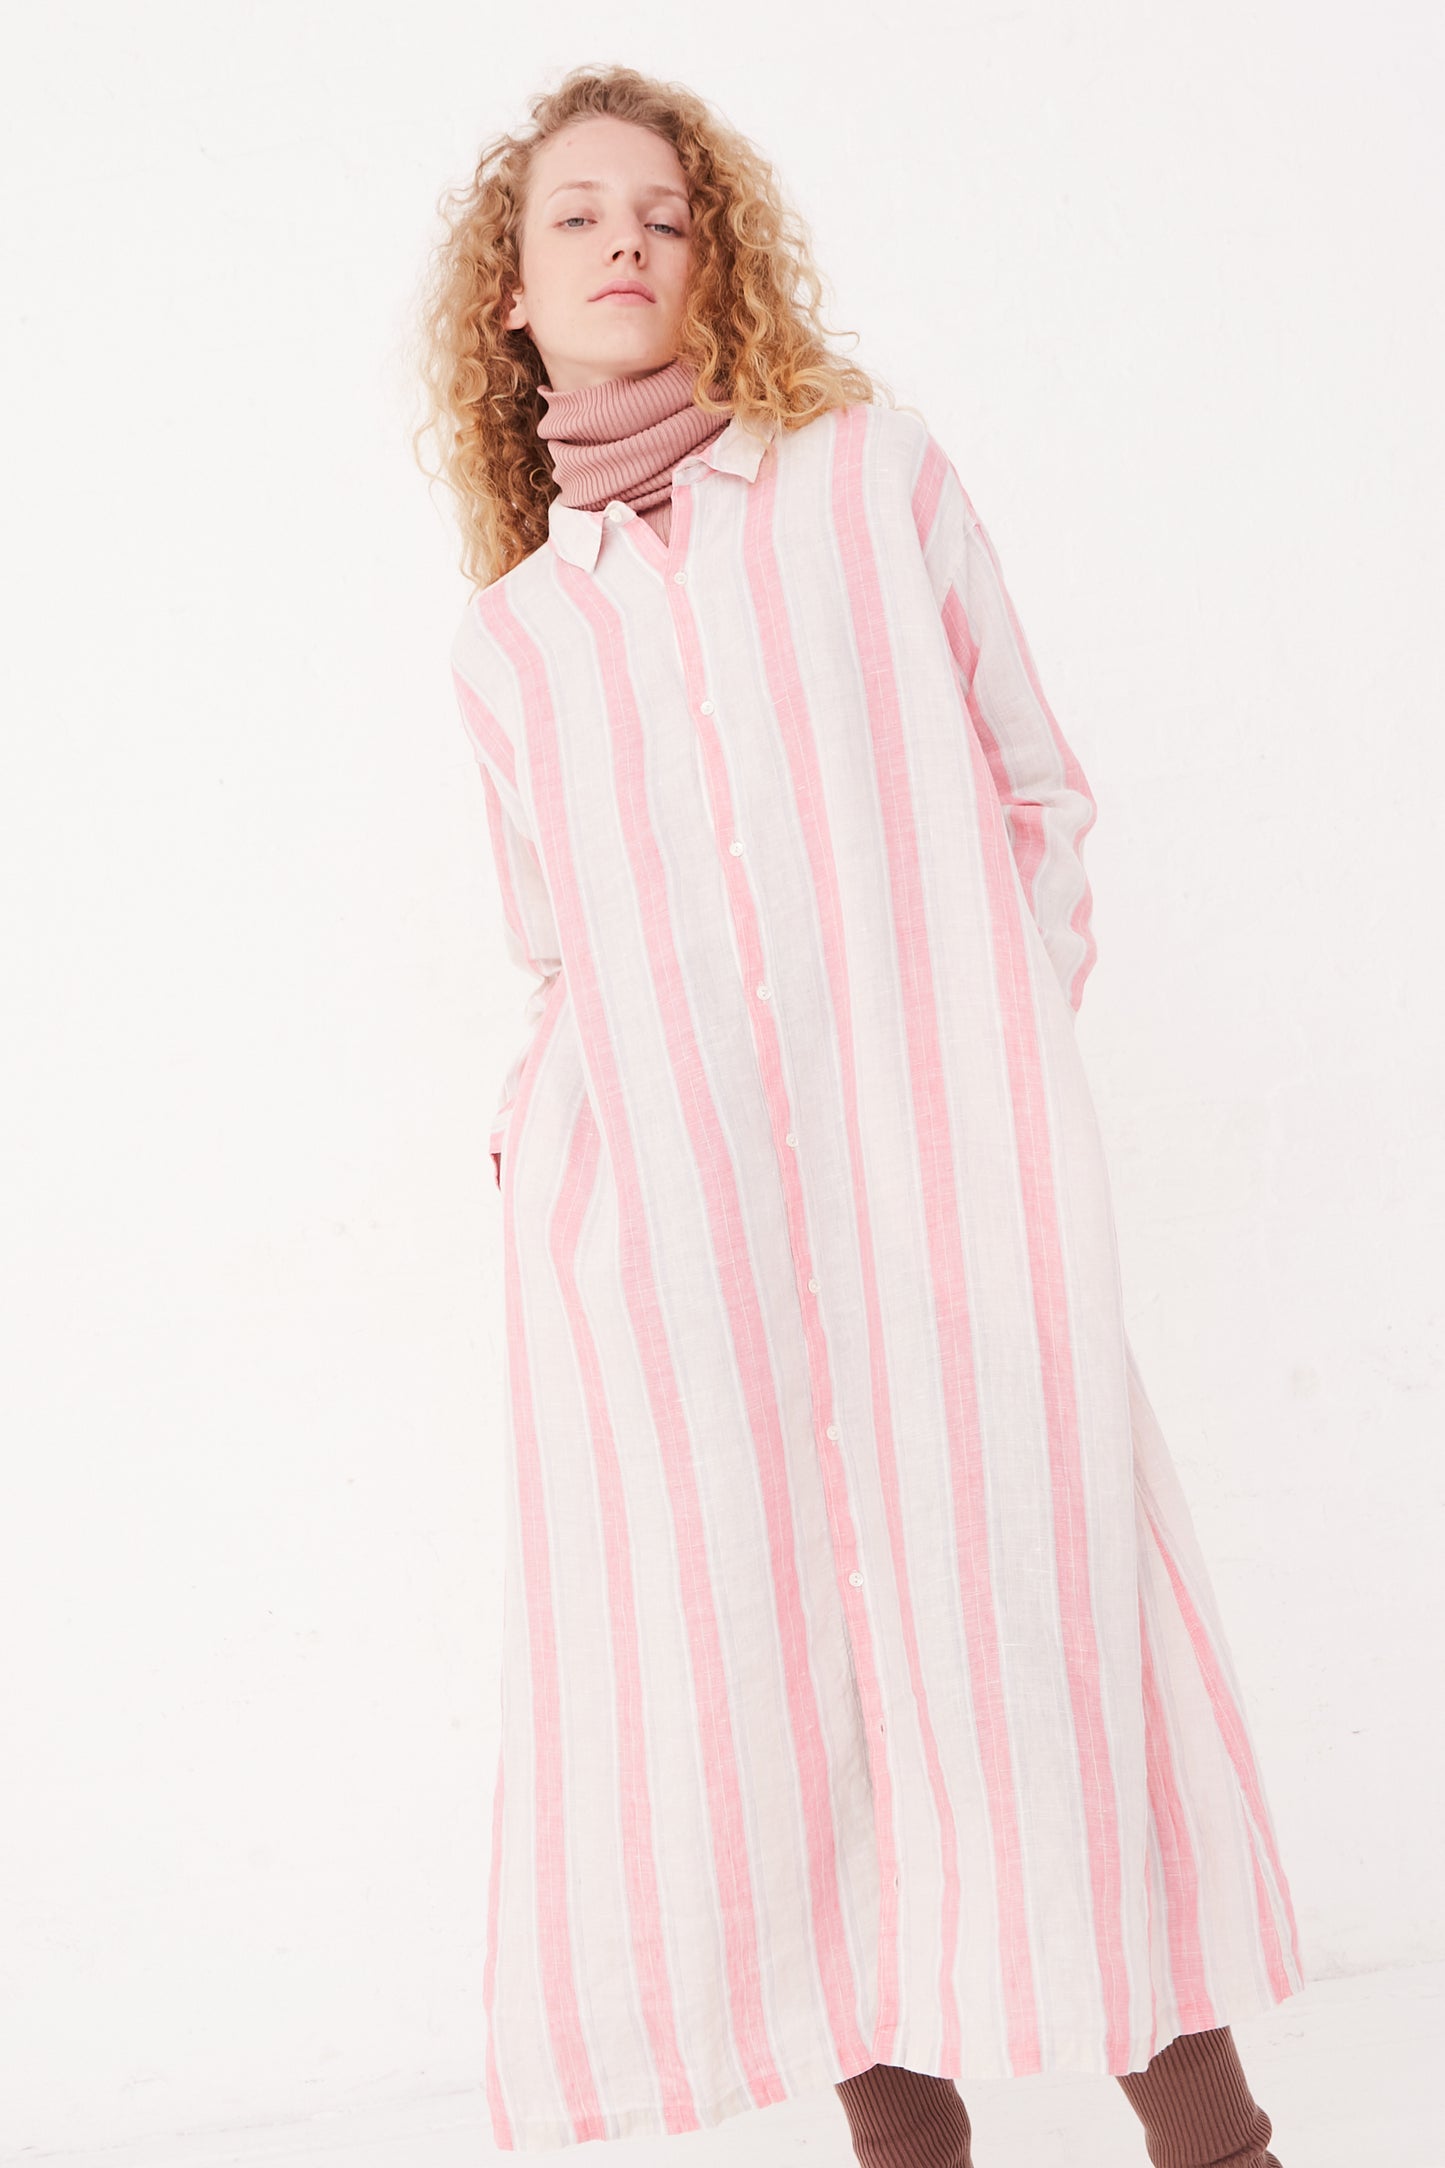 A model wearing a Linen Stripe Dress in Pink by Ichi Antiquités.